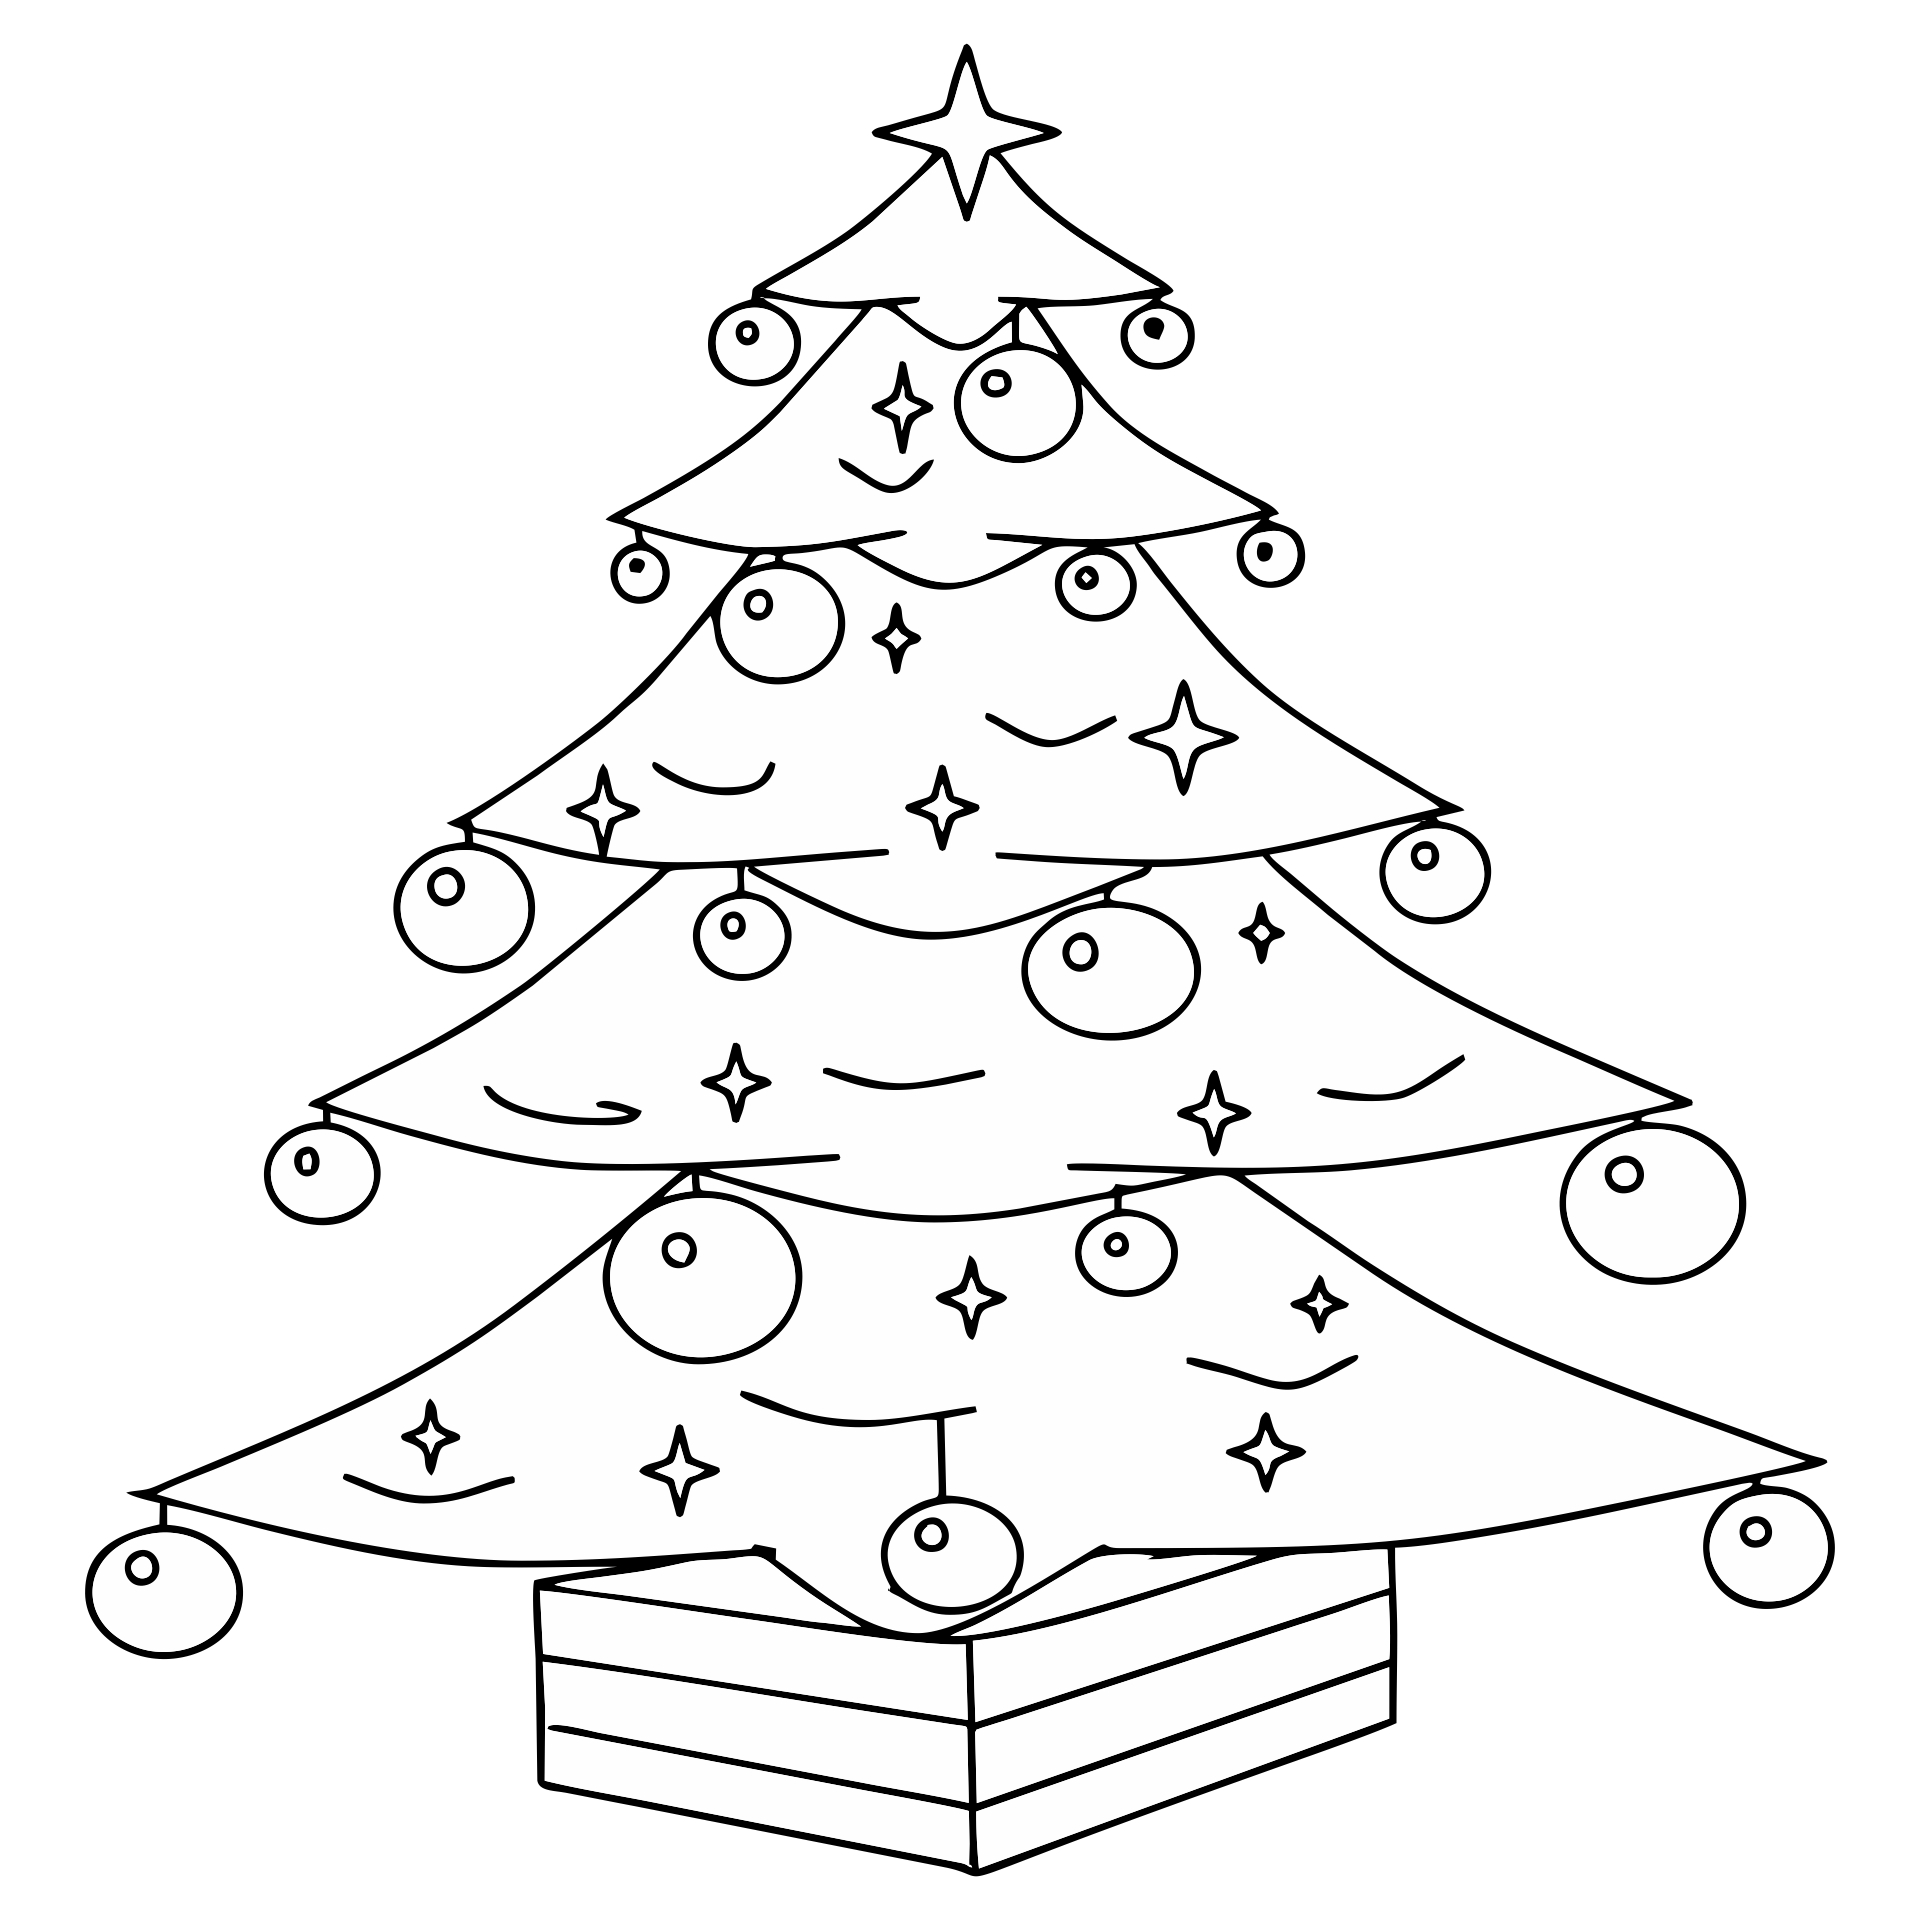 5 Best Images of Printable Blank Christmas Tree Christmas Tree